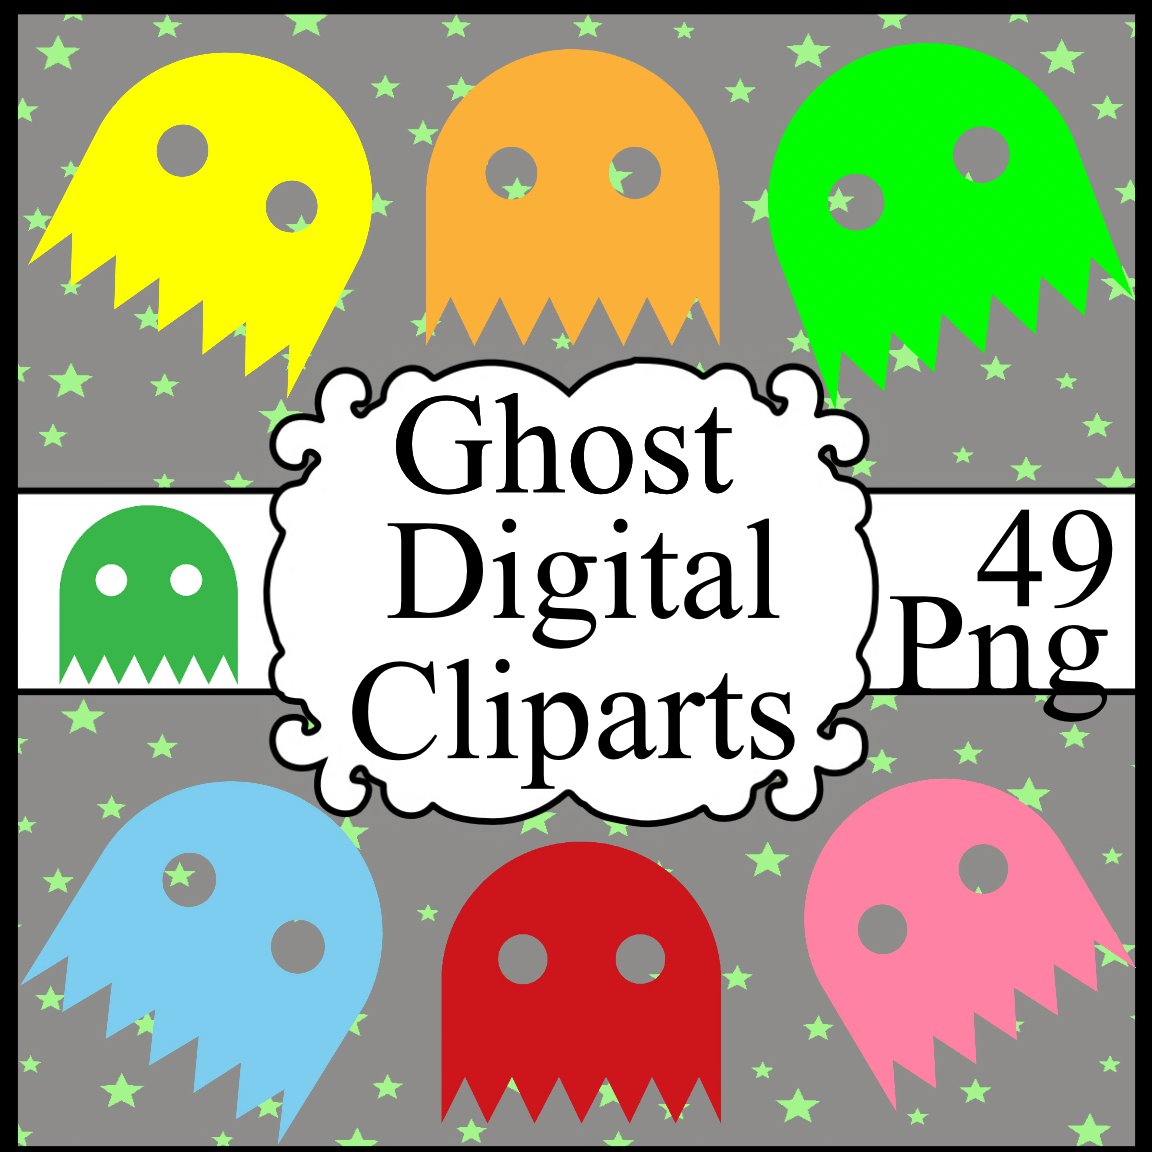 Ghost Digital Cliparts Vol. 1